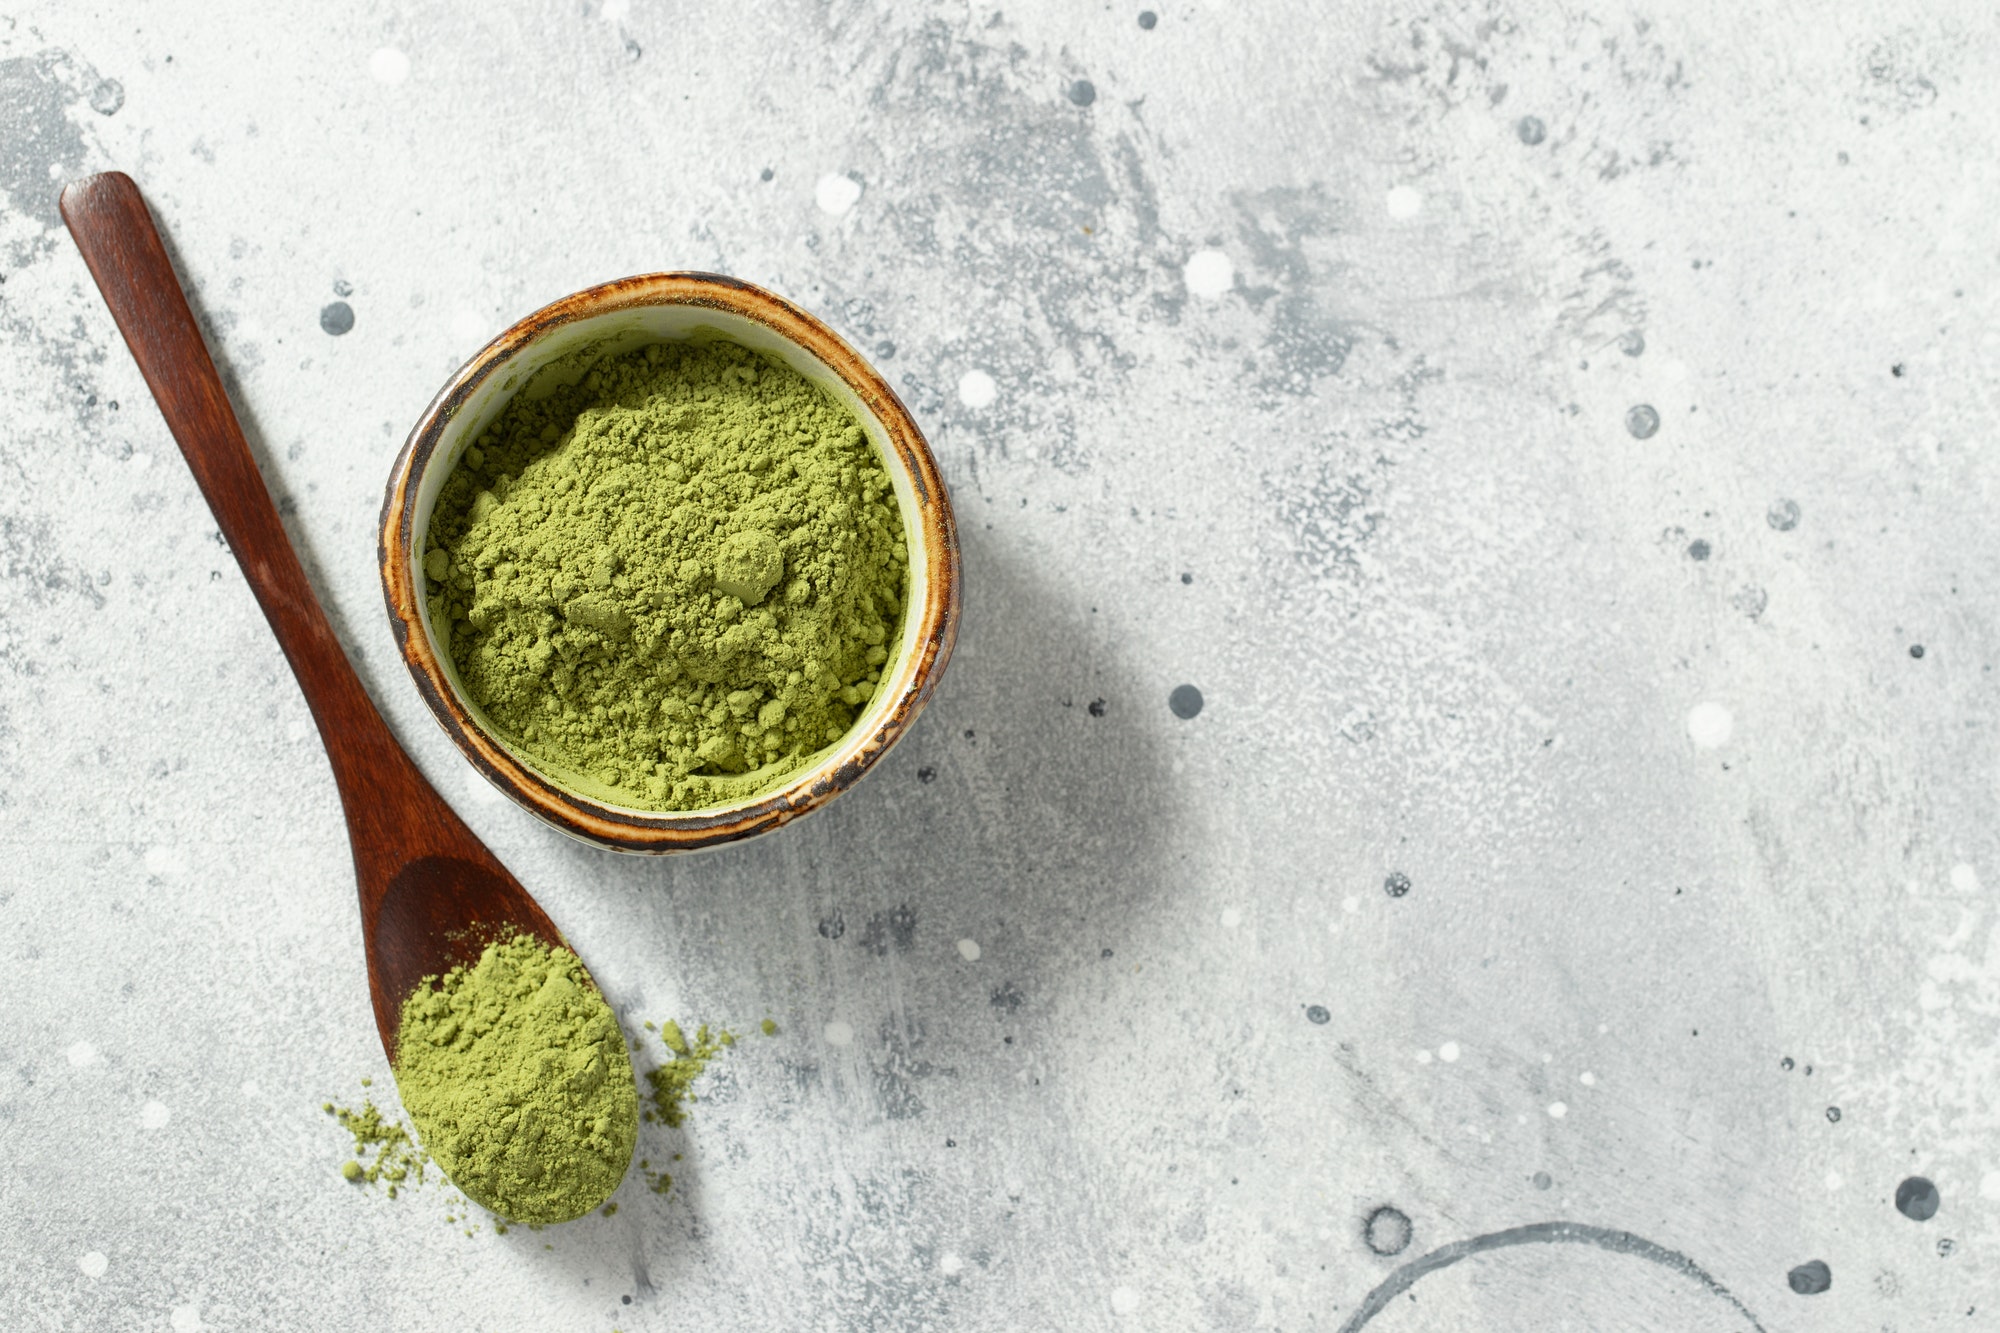 Green matcha tea powder with spoon on white concrete background.